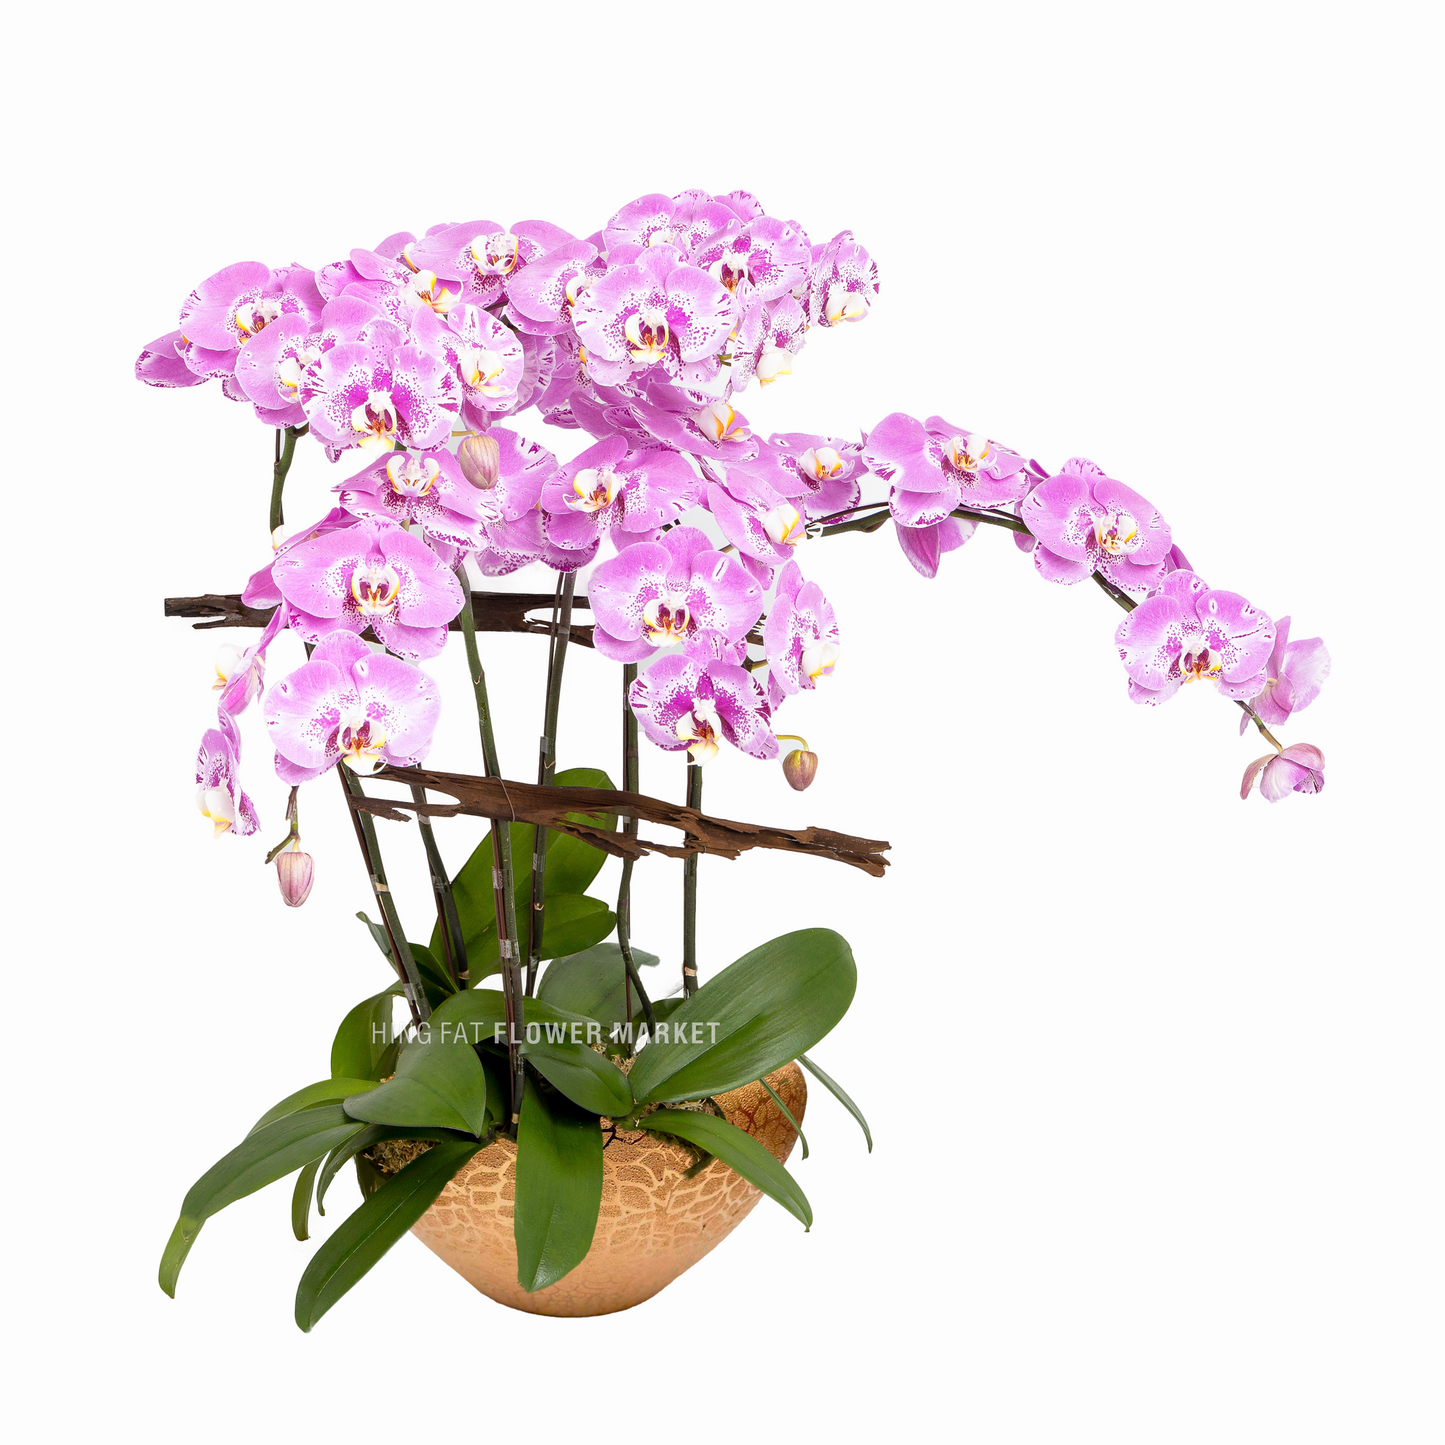 5菖粉蝴蝶蘭 Pink orchids (5 stems)